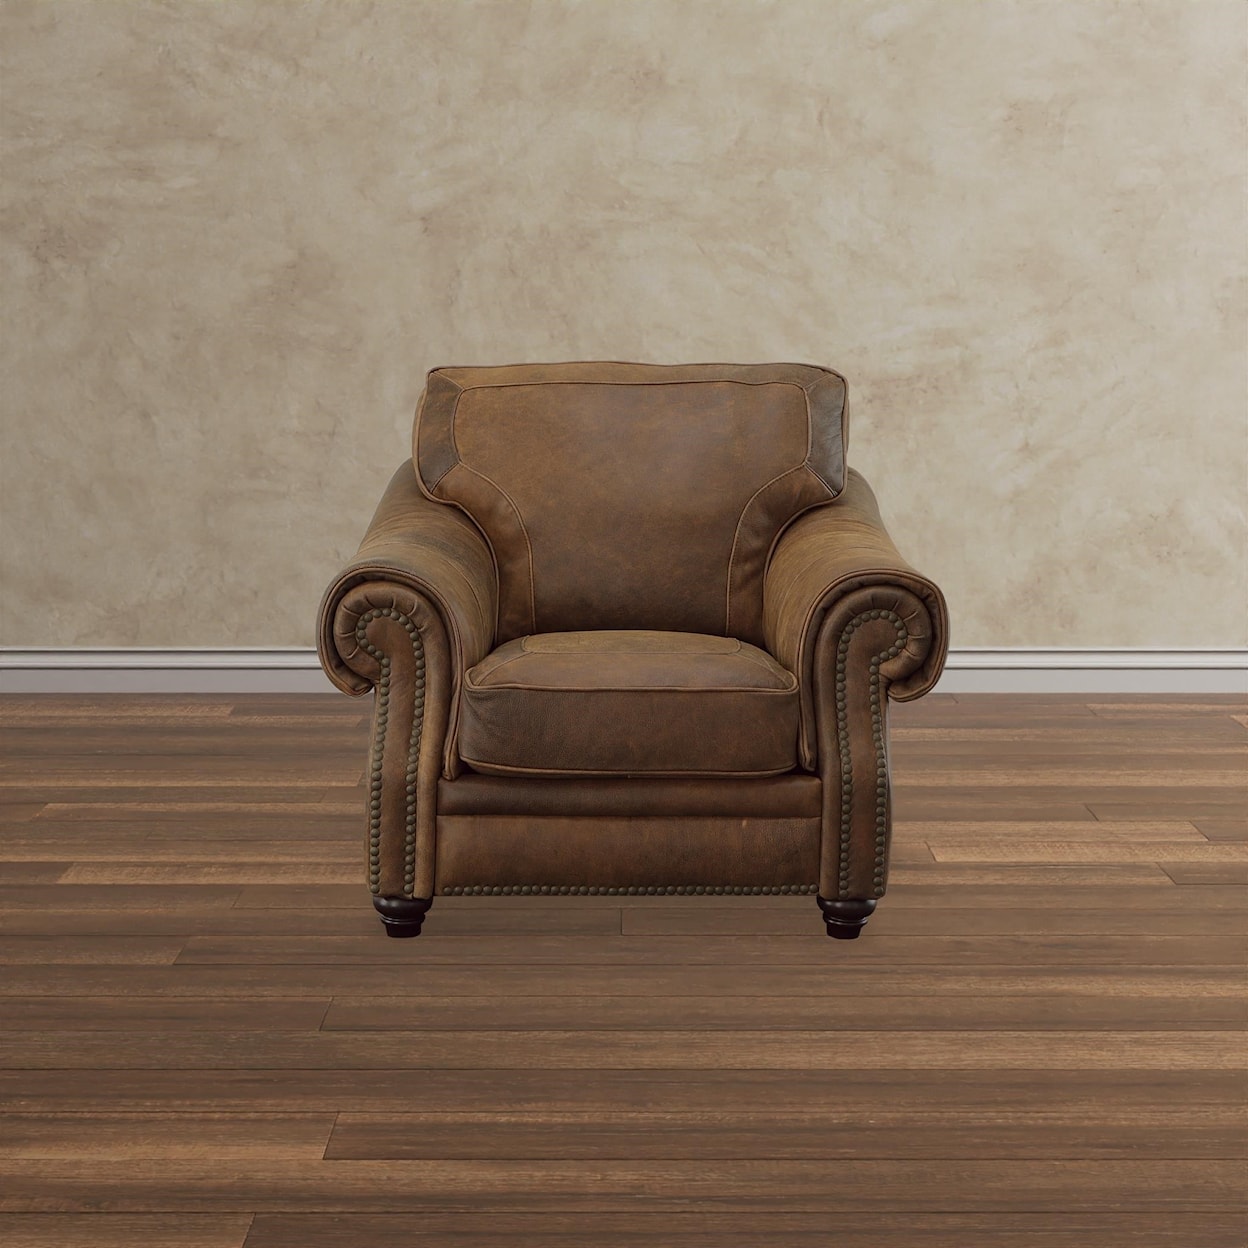 Virginia Furniture Market Premium Leather Tuscany Chair